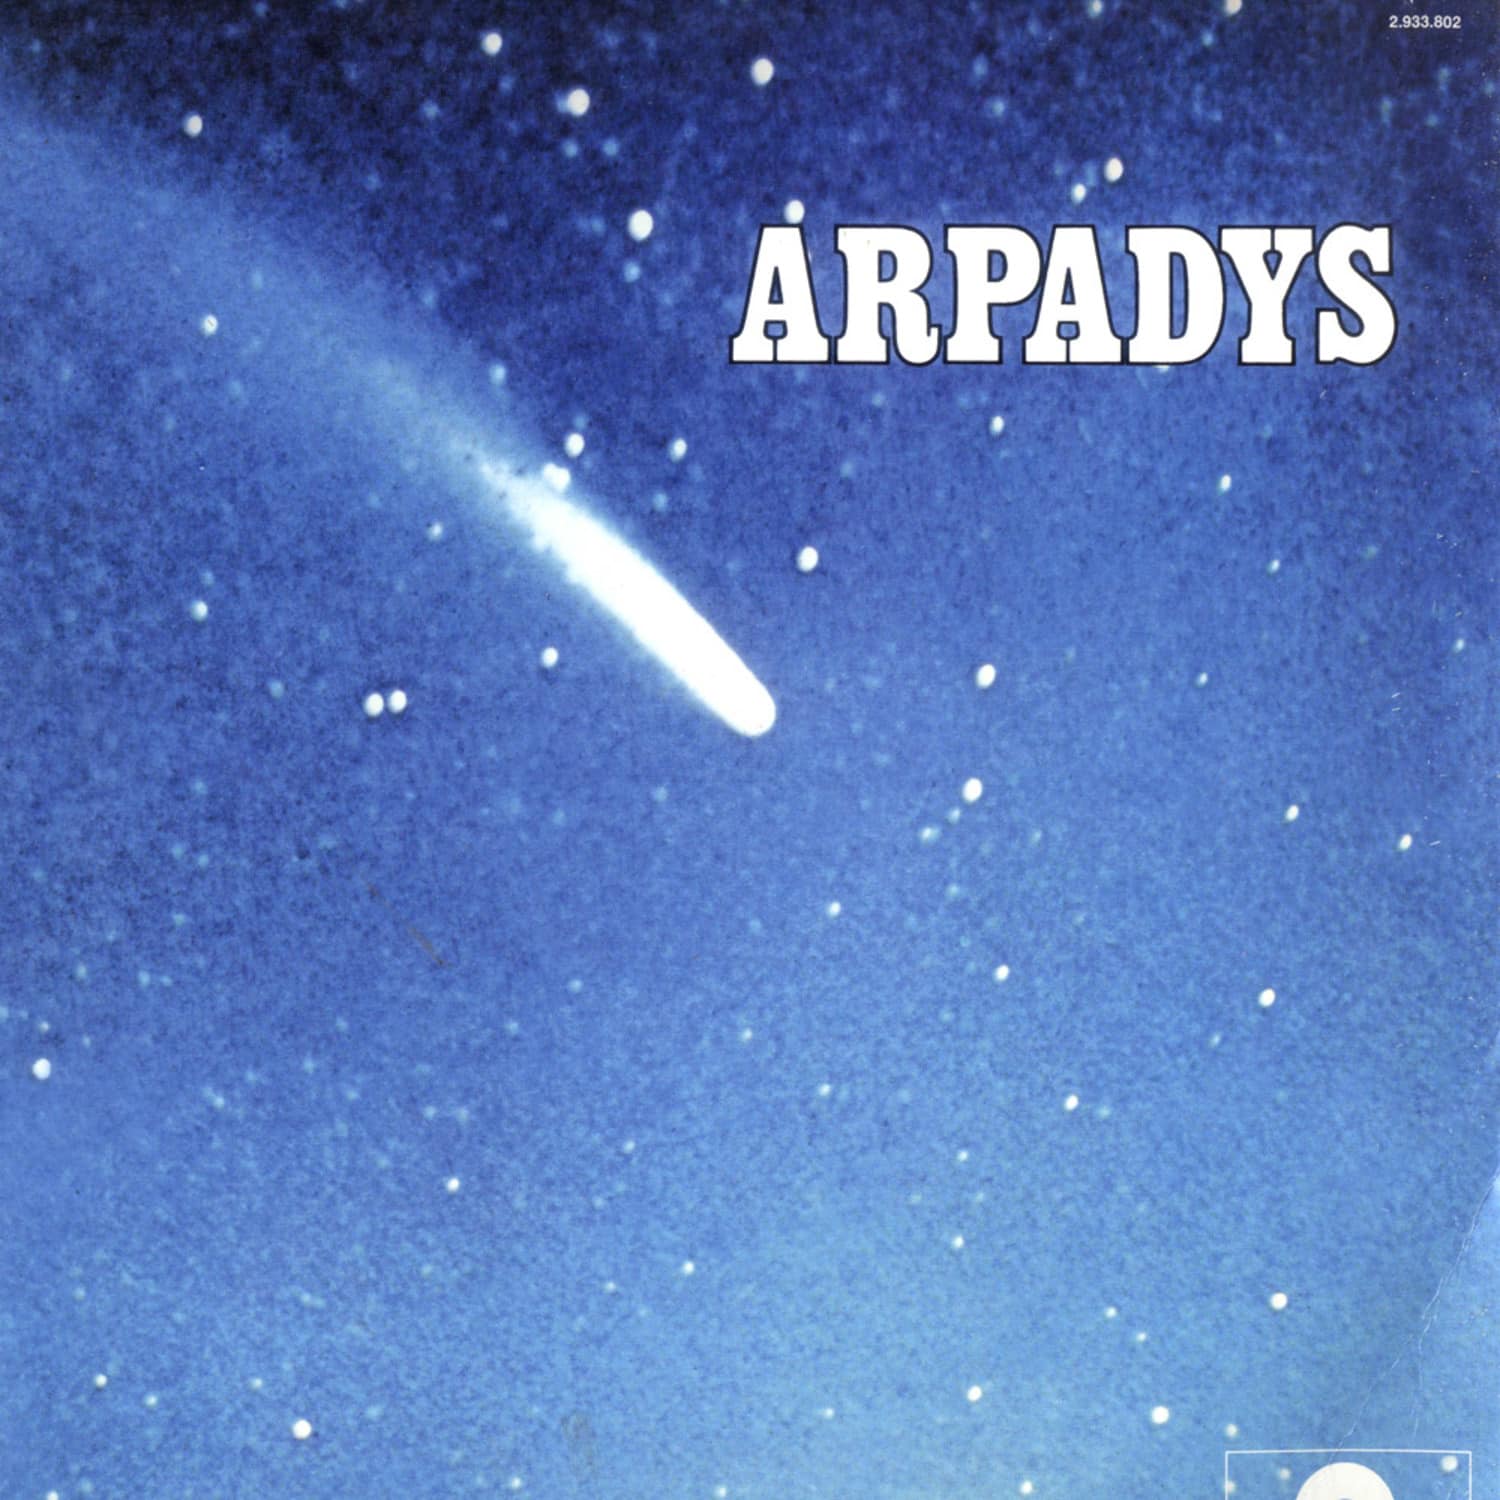 Arpadys - ARPADYS LP